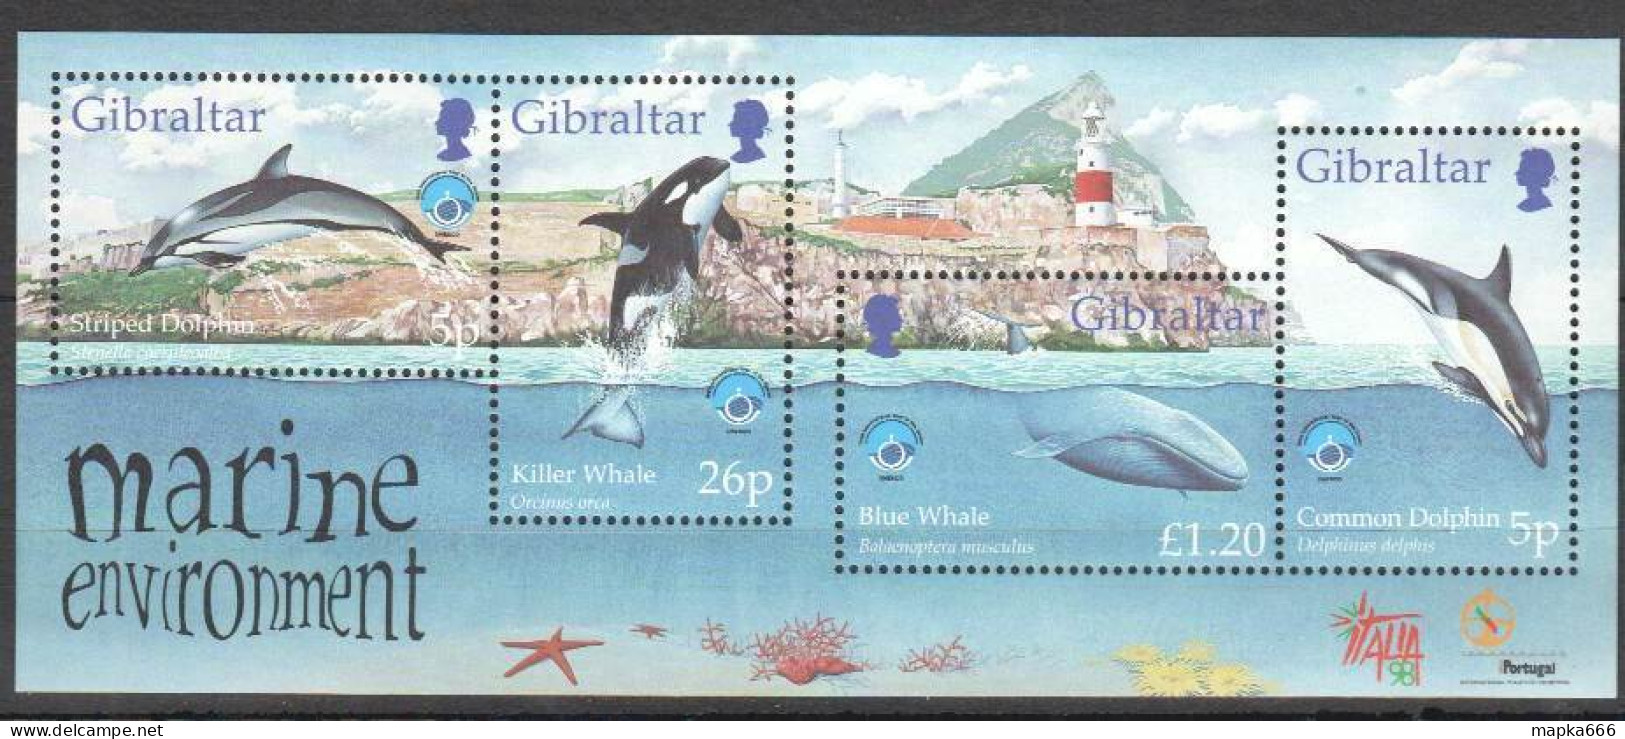 Oz0106 1998 Gibraltar Marine Enviroment Year Of The Ocean Bl34 Mnh - Meereswelt